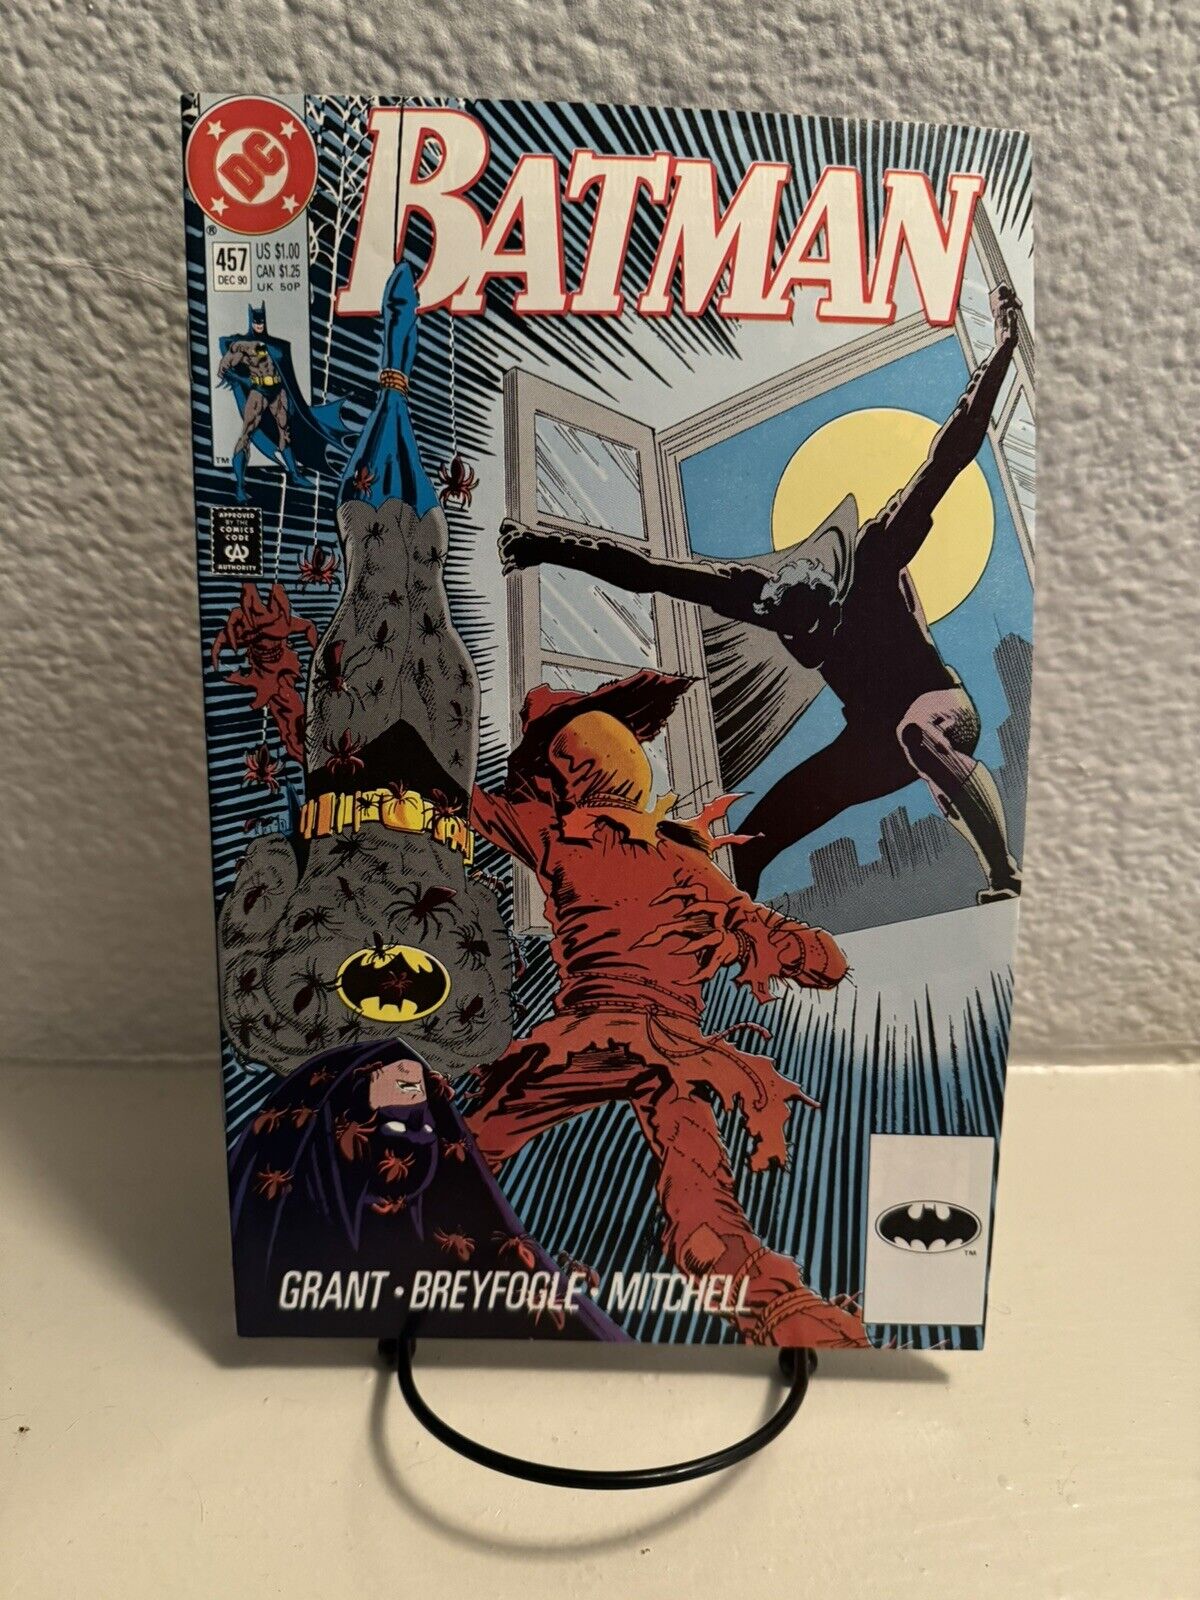 Batman Vol. 1 #457 (December 1990) - 1st Appearance of Tim Drake as Robin